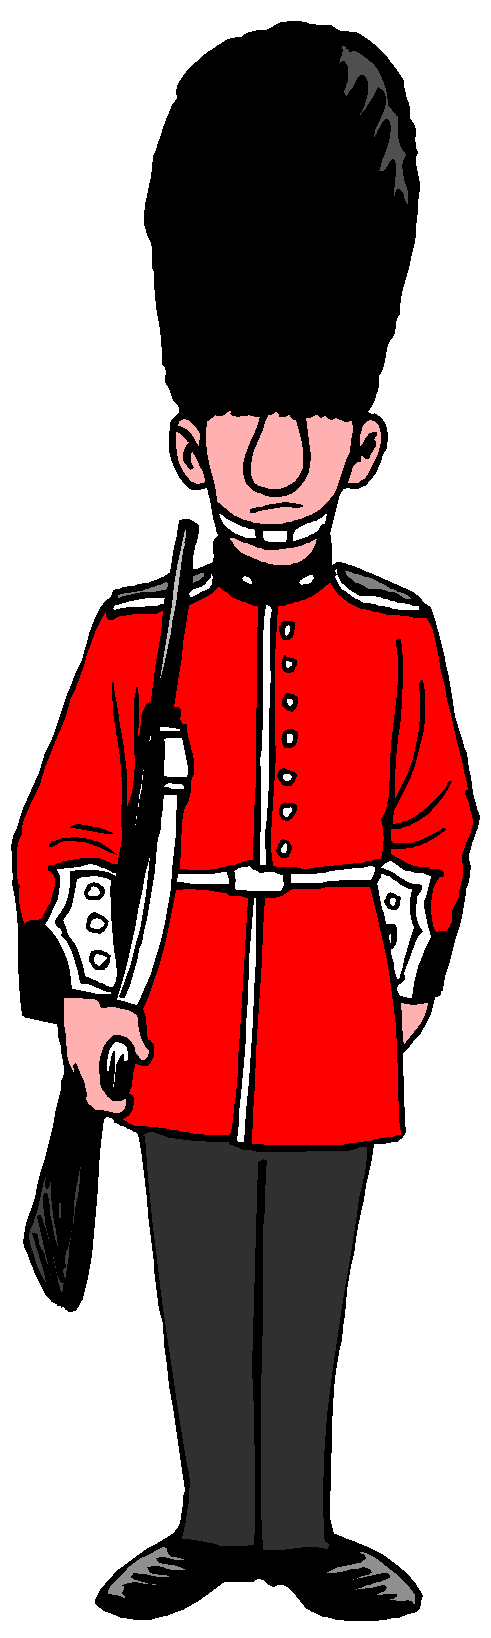 london clipart guards